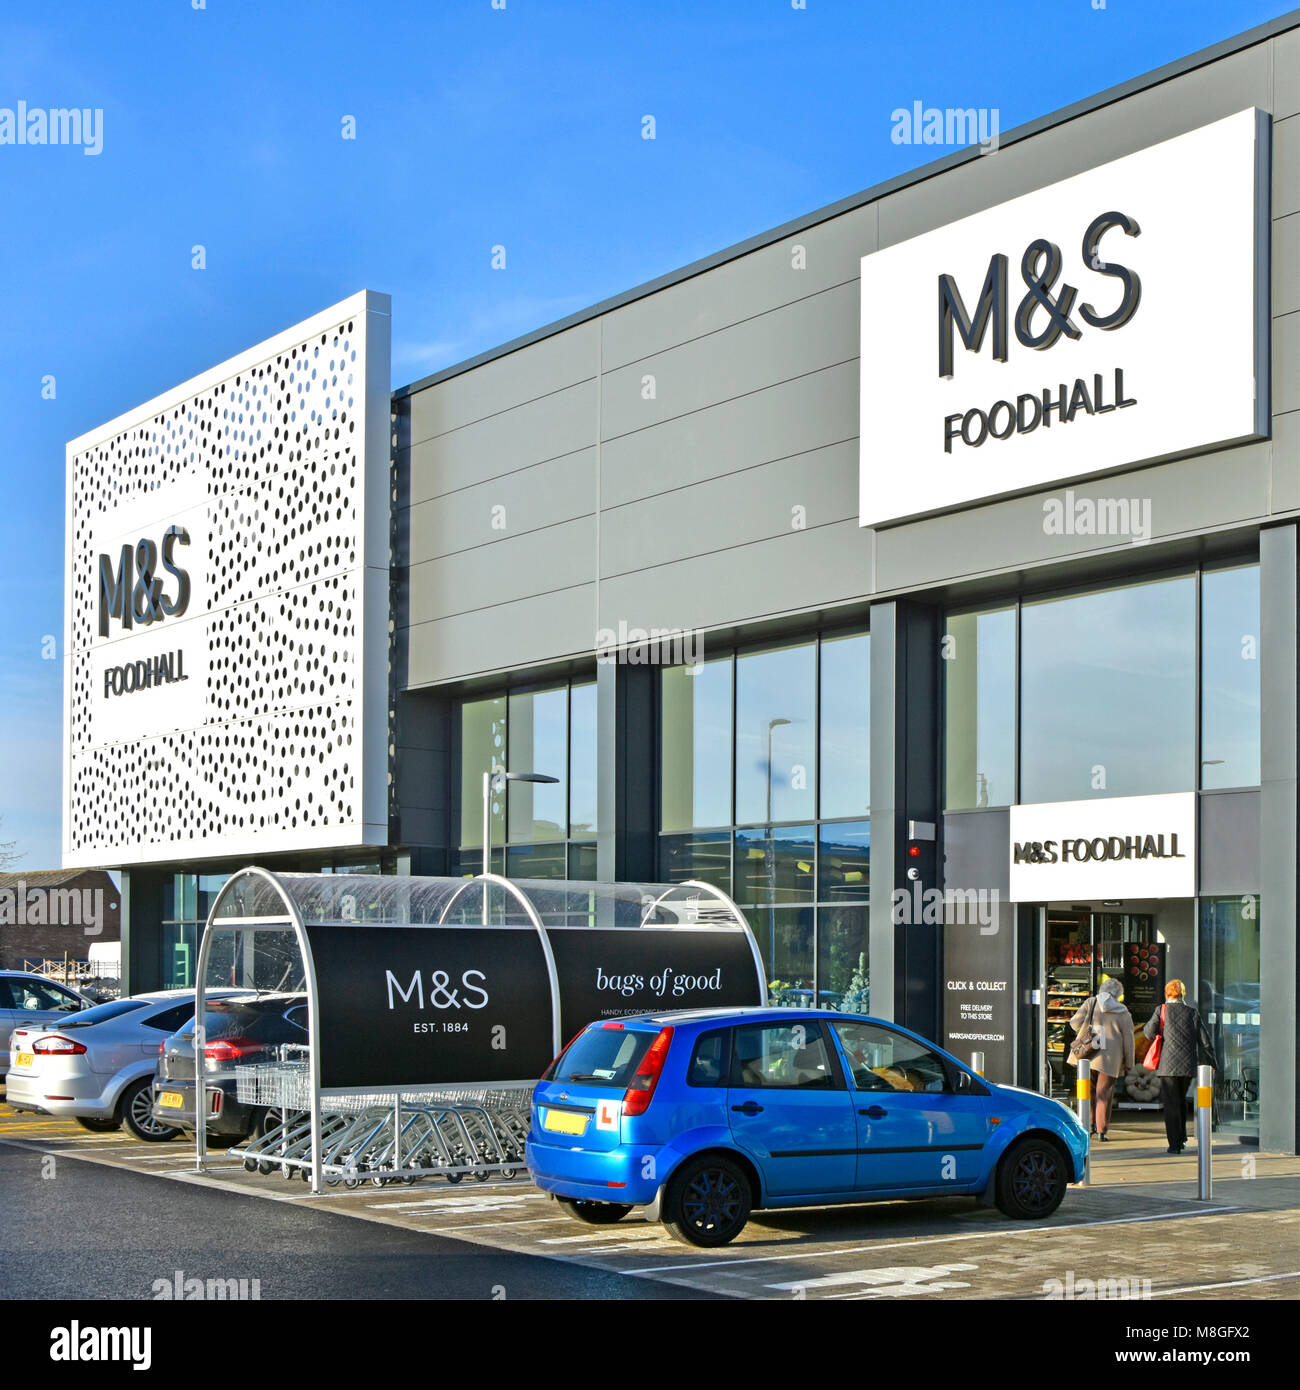 M&S arquitectura moderna frente al edificio de la tienda de Marks & Spencer foodhall en Retail Park Shopping & food hall cliente Chelmsford Essex, Inglaterra Foto de stock